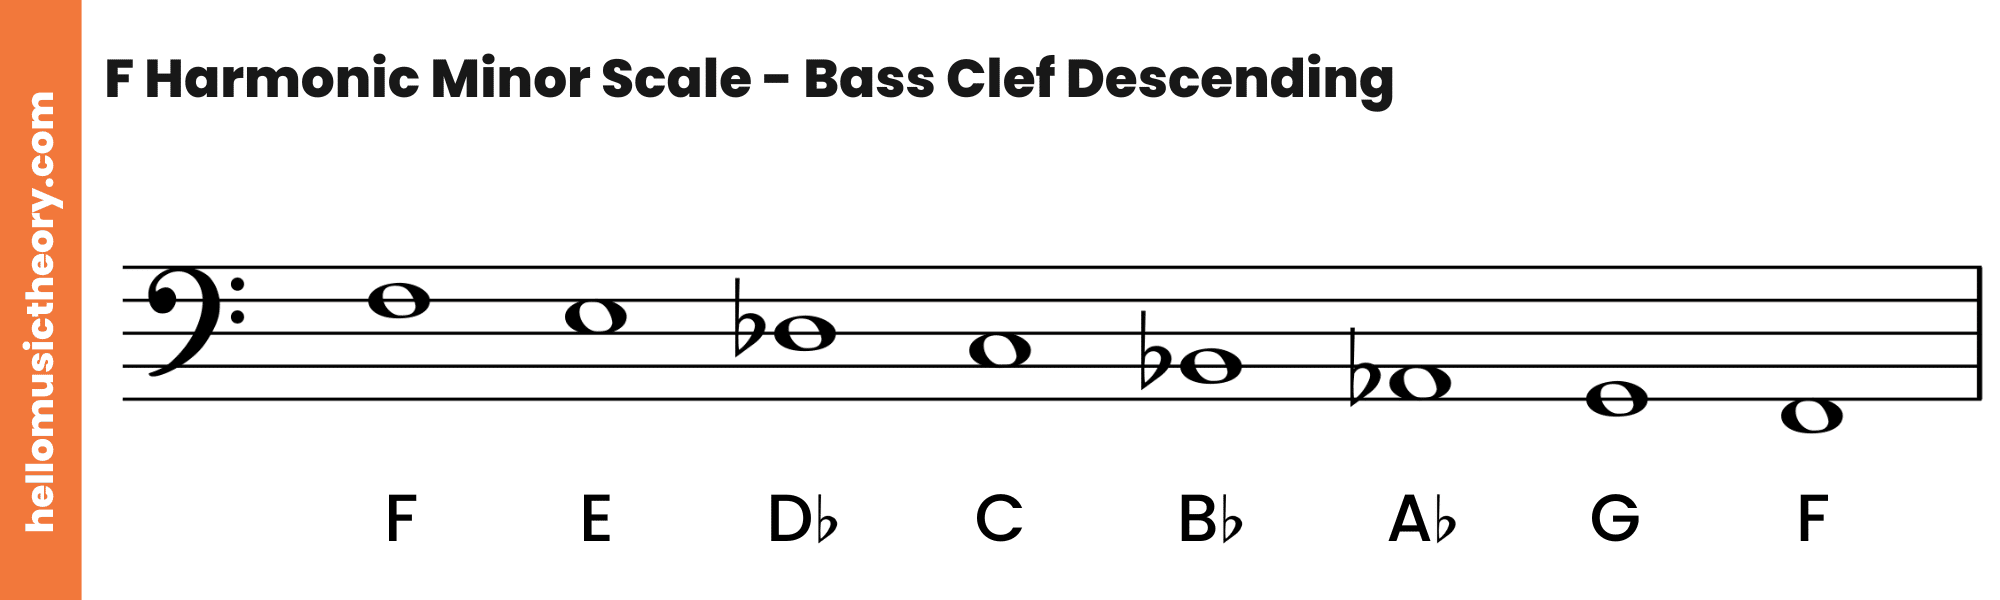 F Harmonic Minor Scale Bass Clef Descending